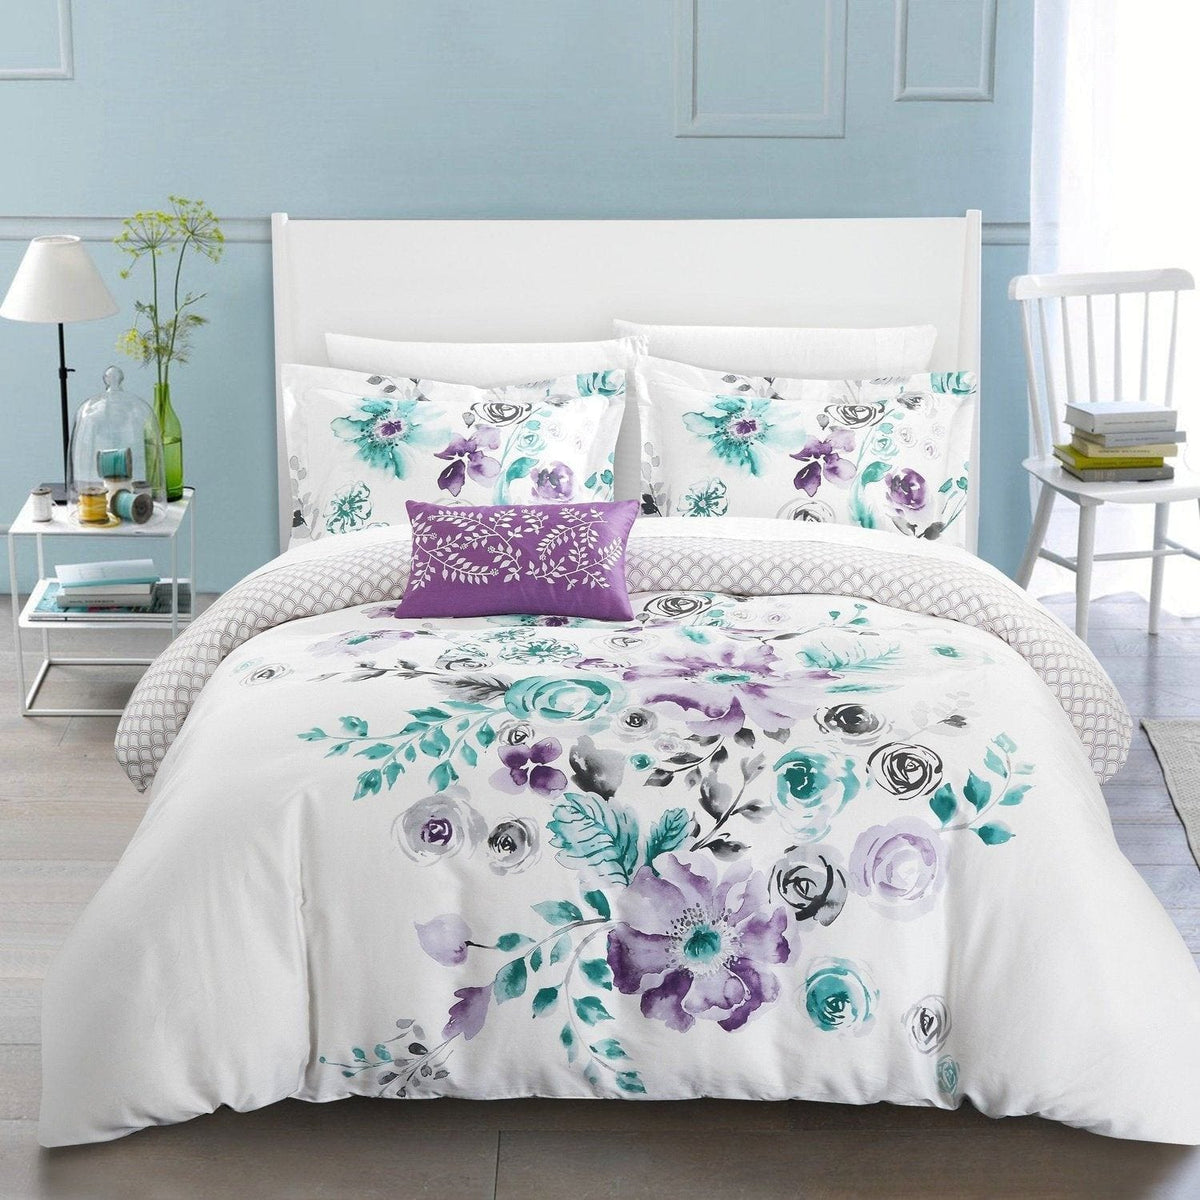 Chic Home Enchanted Garden 4 Piece Cotton Duvet Cover Set Lavender